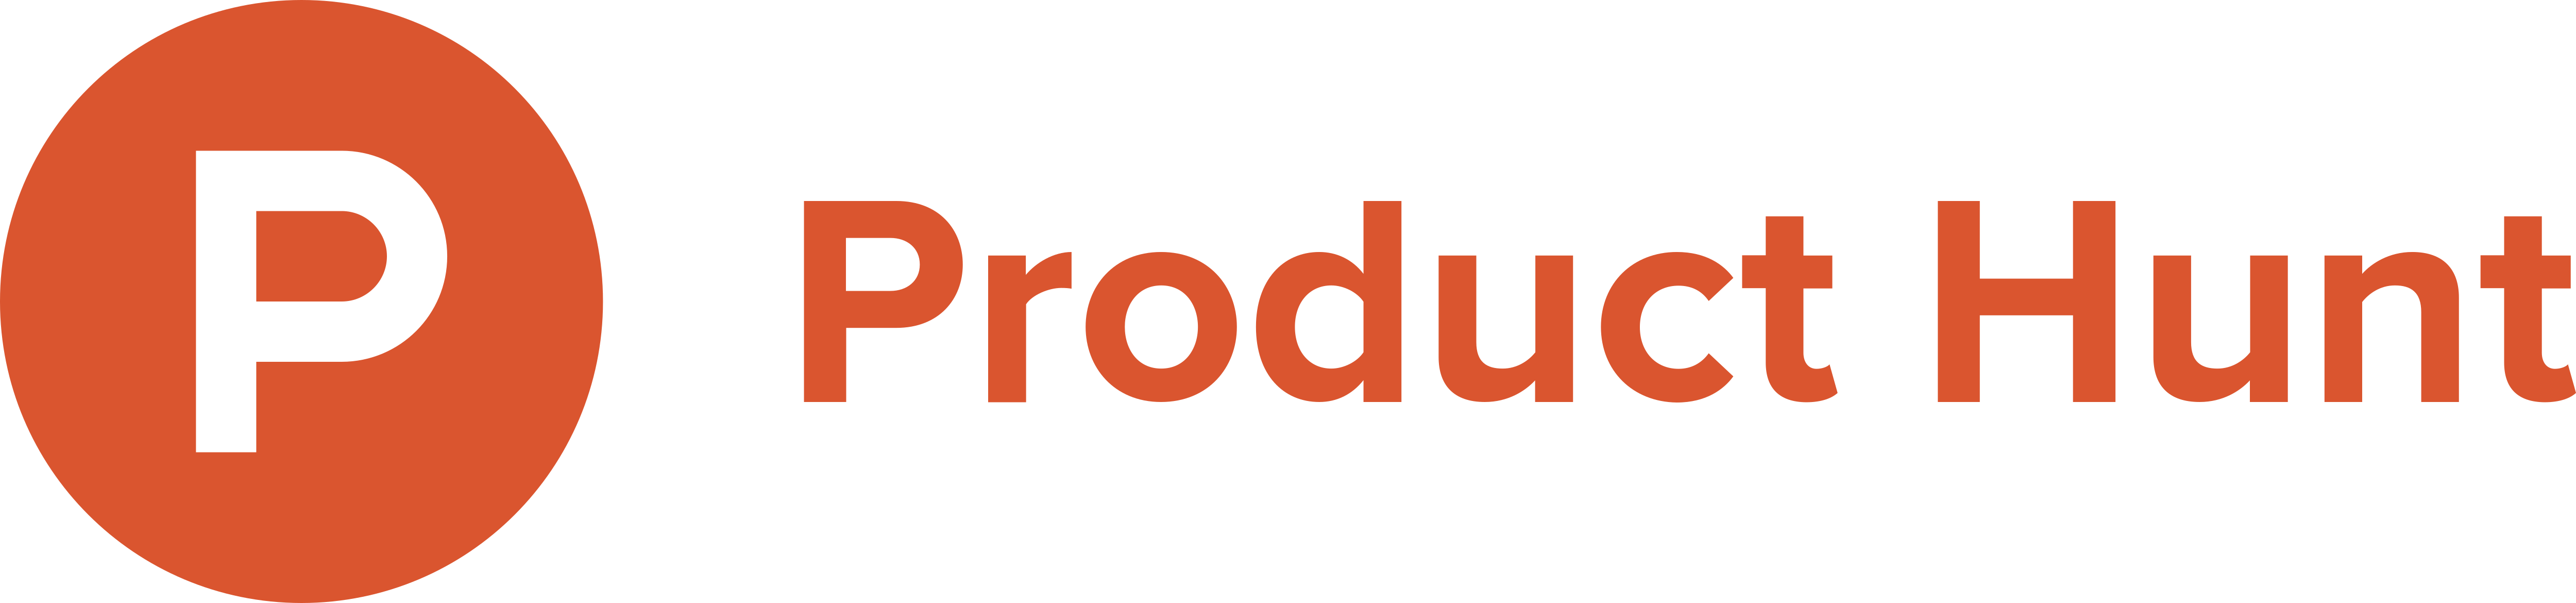  Product Hunt Logos Download